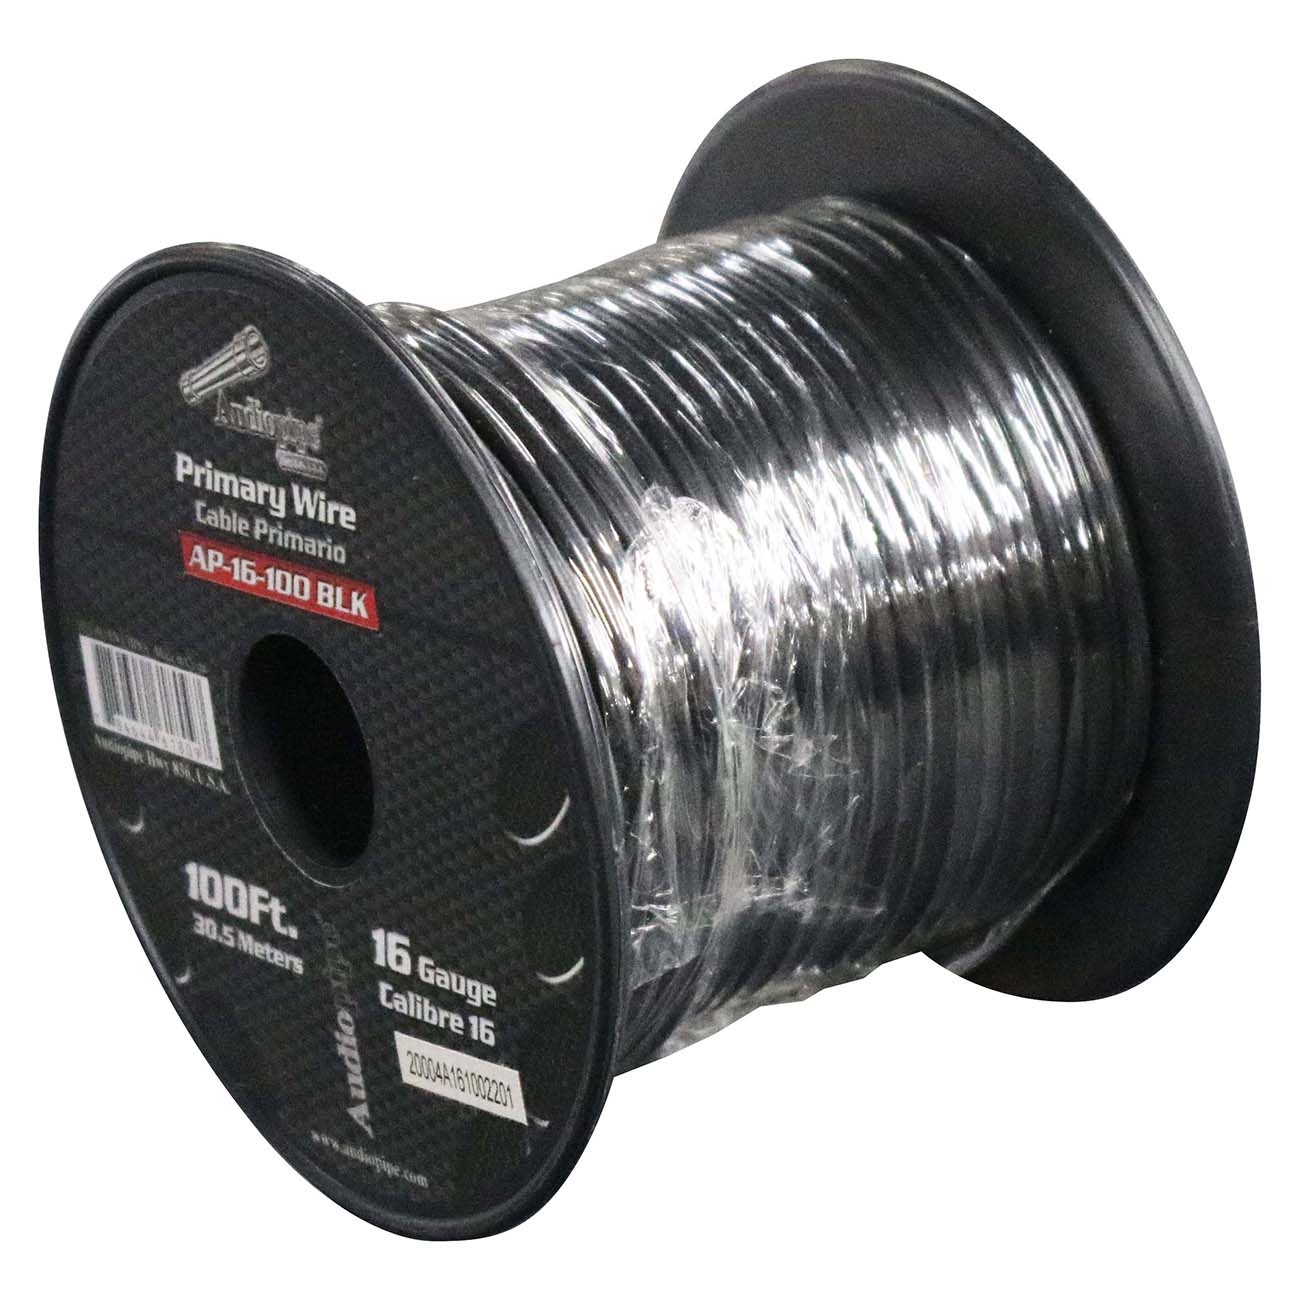 Audiopipe 16 Gauge 100ft Black Primary Wire